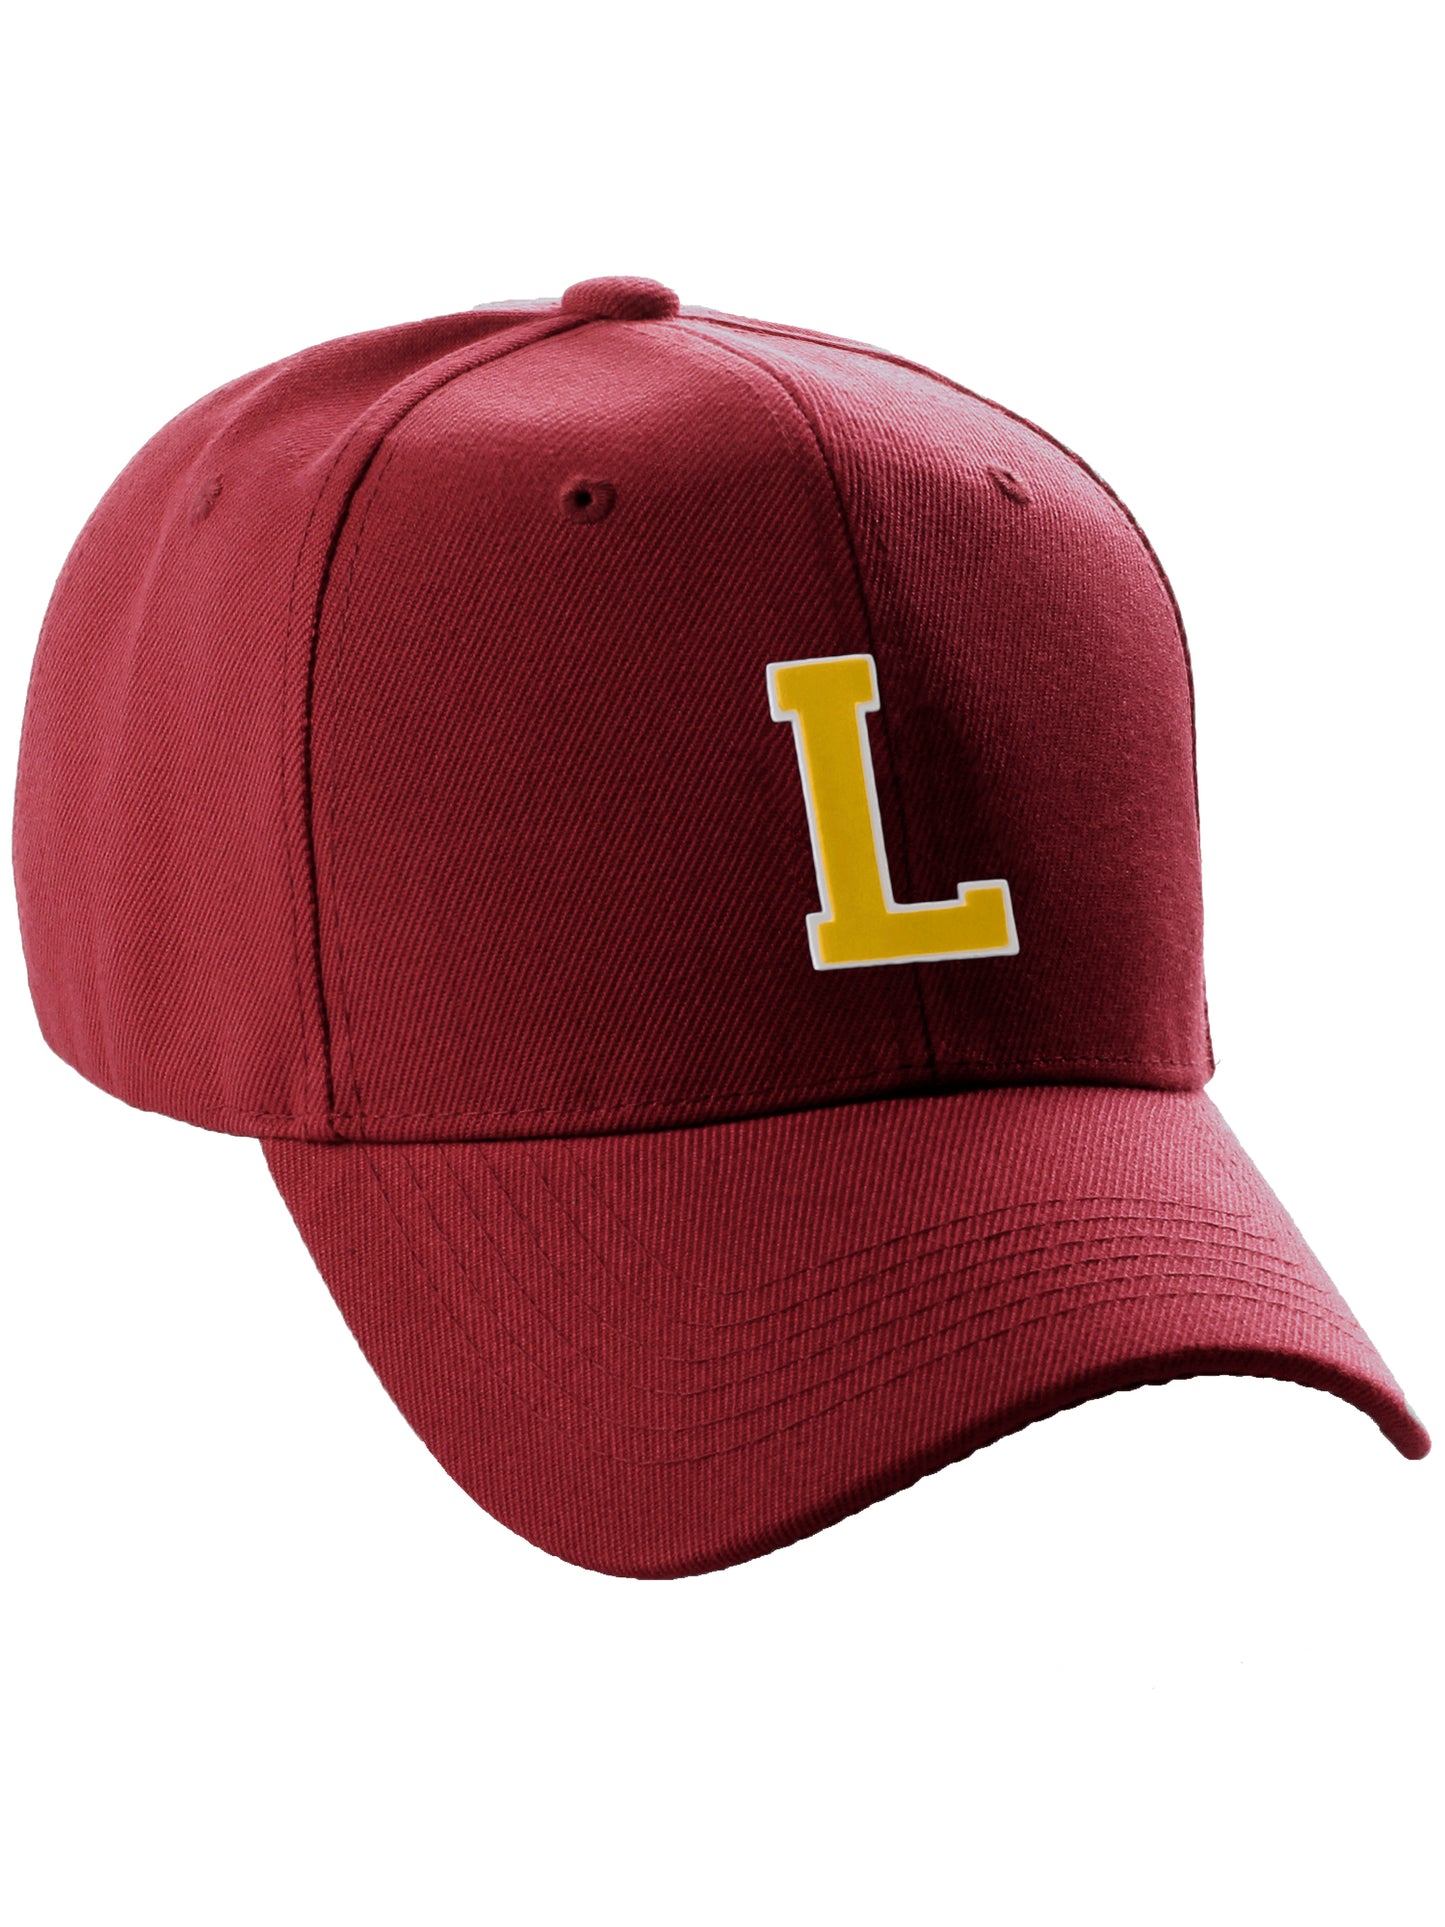 Classic Baseball Hat Custom A to Z Initial Team Letter, Burgundy Cap White Gold